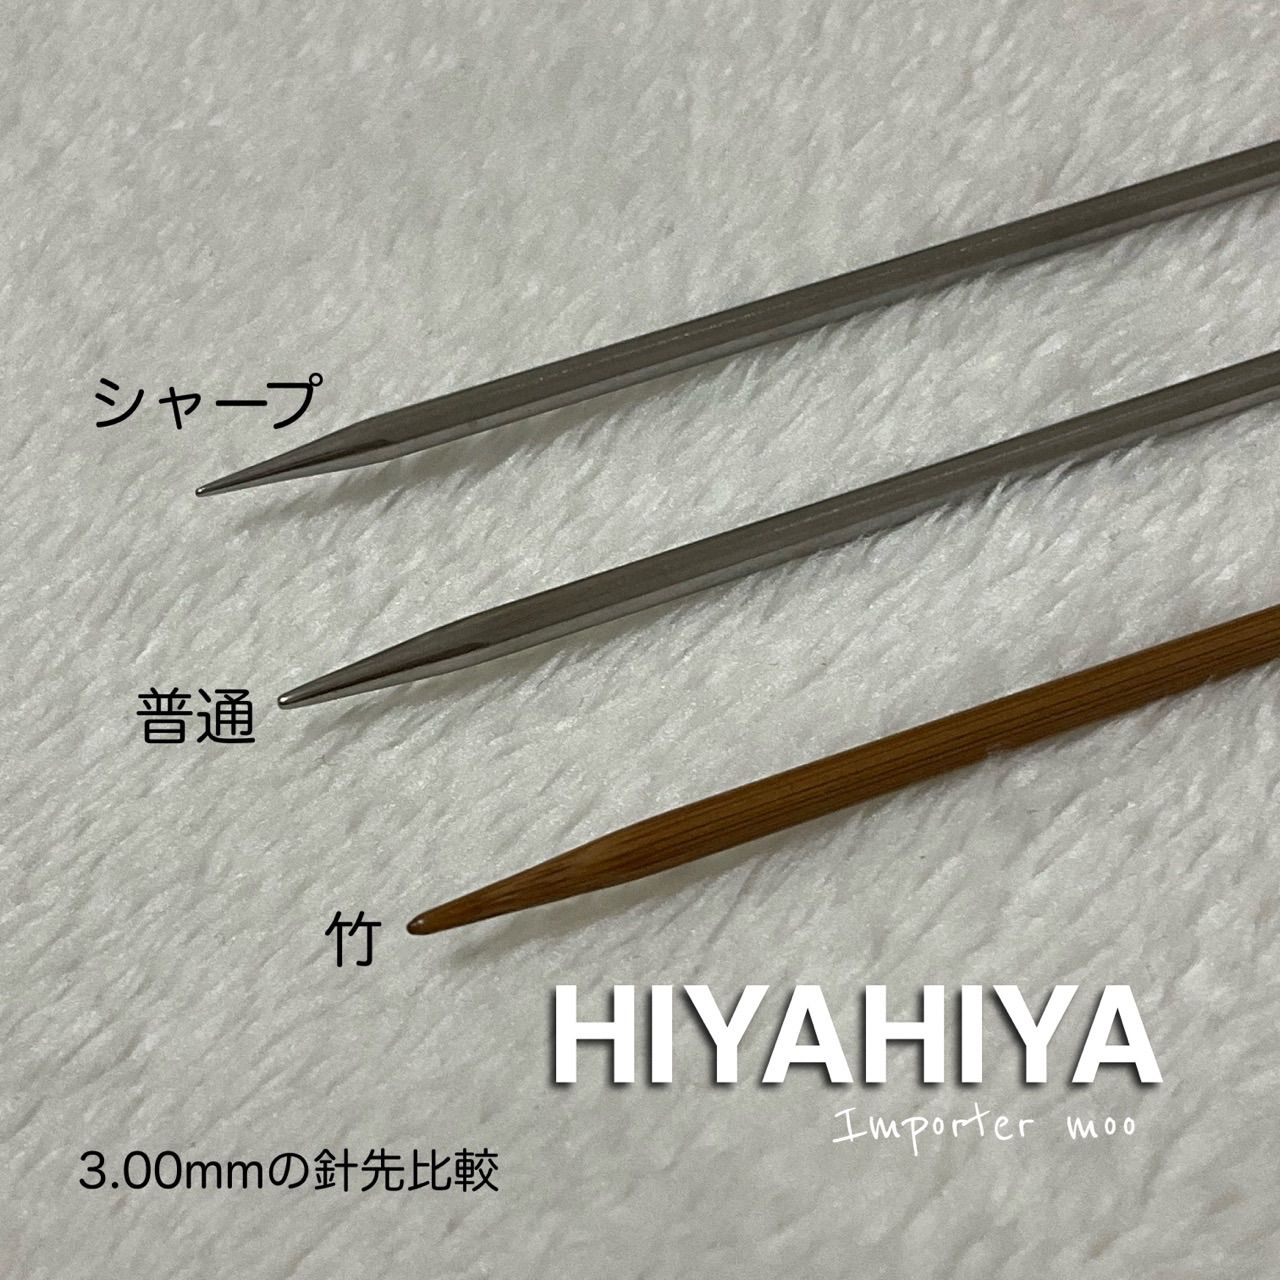 HIYAHIYA small 竹 5インチ8本 付け替え輪針セット bambooバンブープレミアムスタンダード